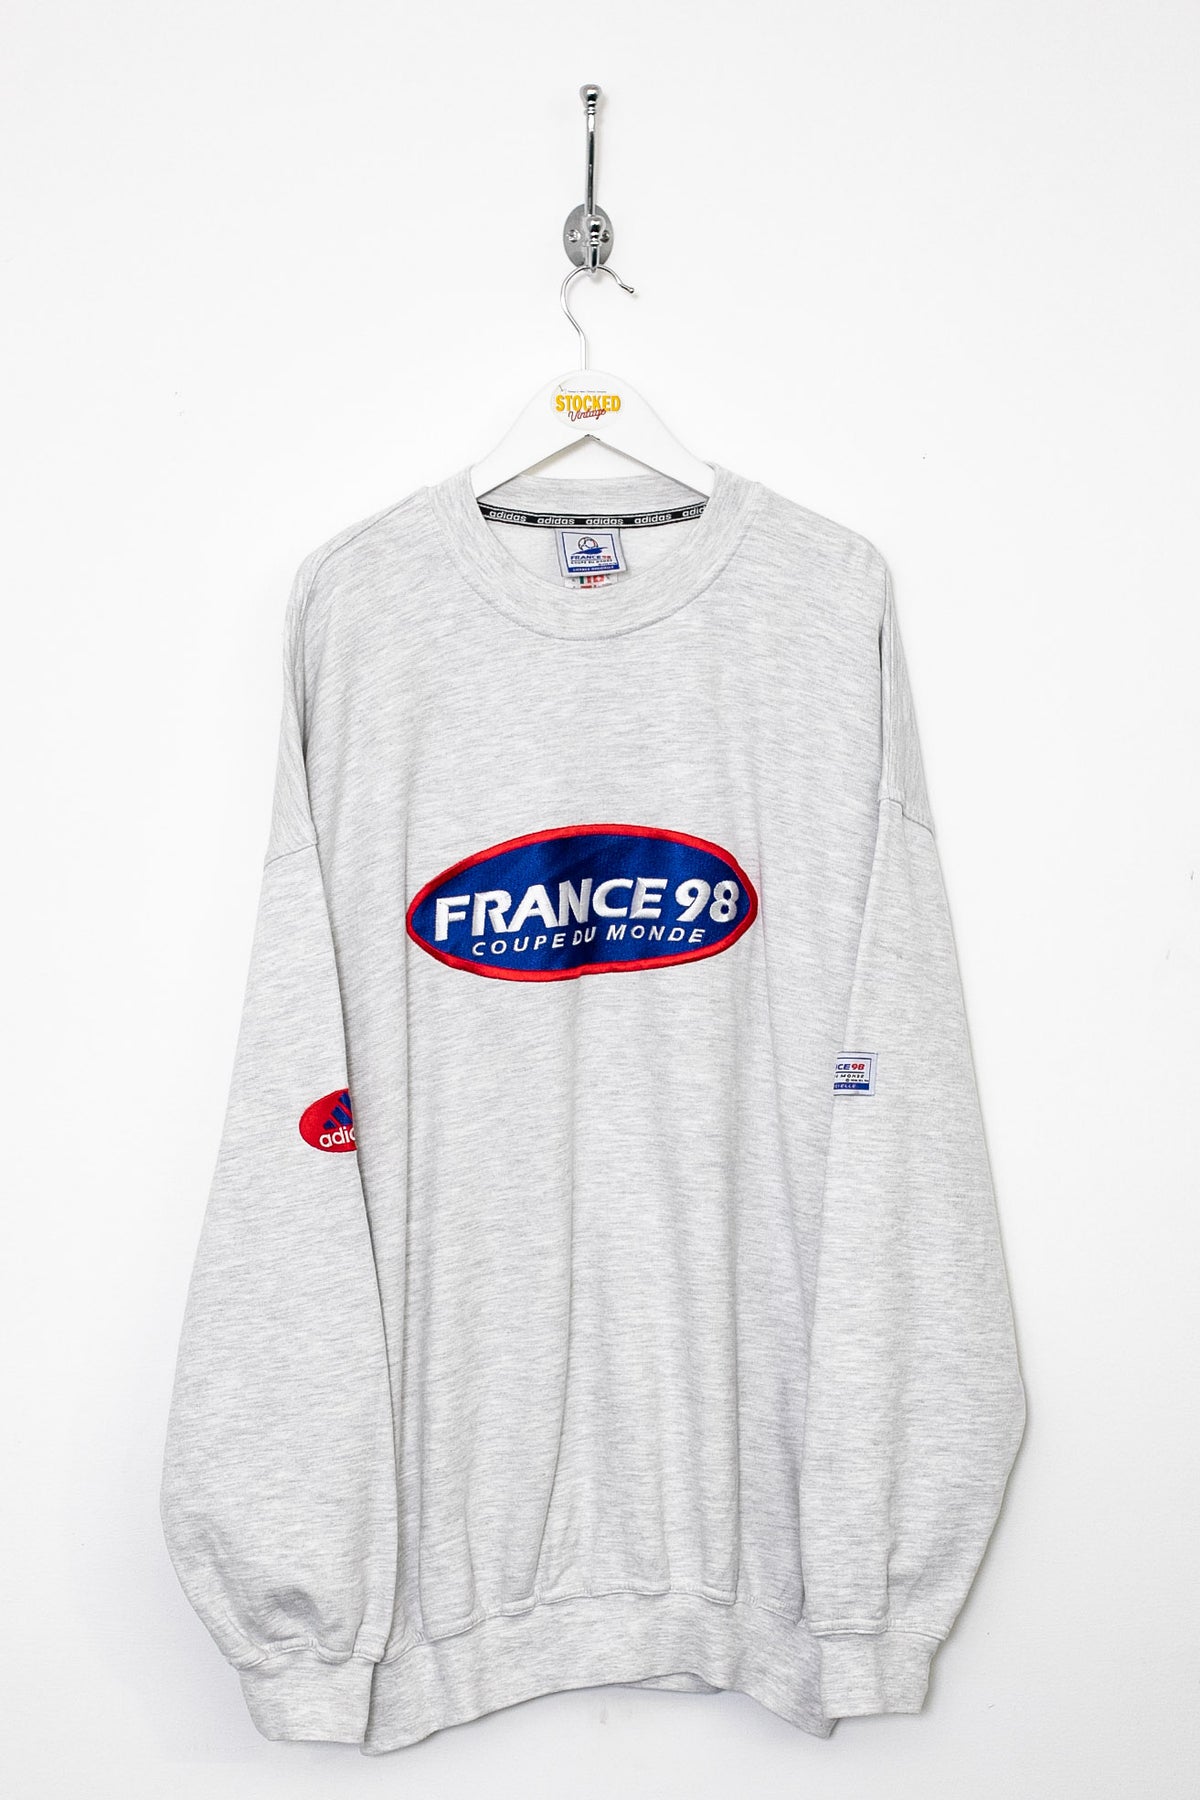 90s Adidas France World Cup Sweatshirt (XL)